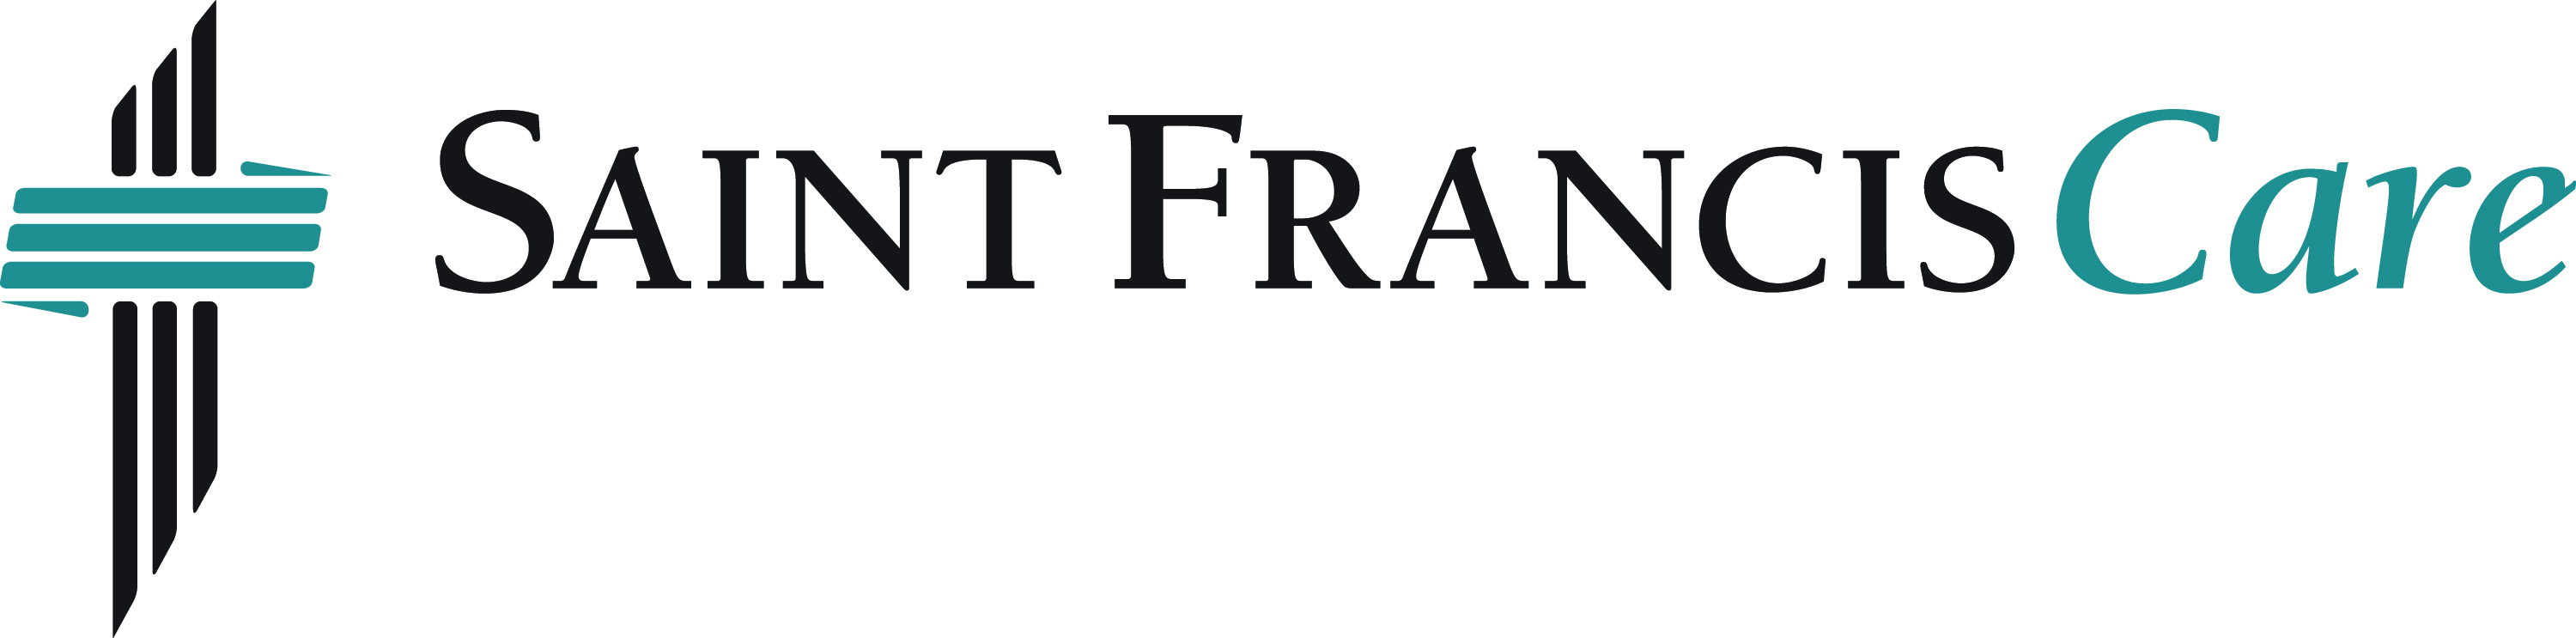 Saint Francis Care logo